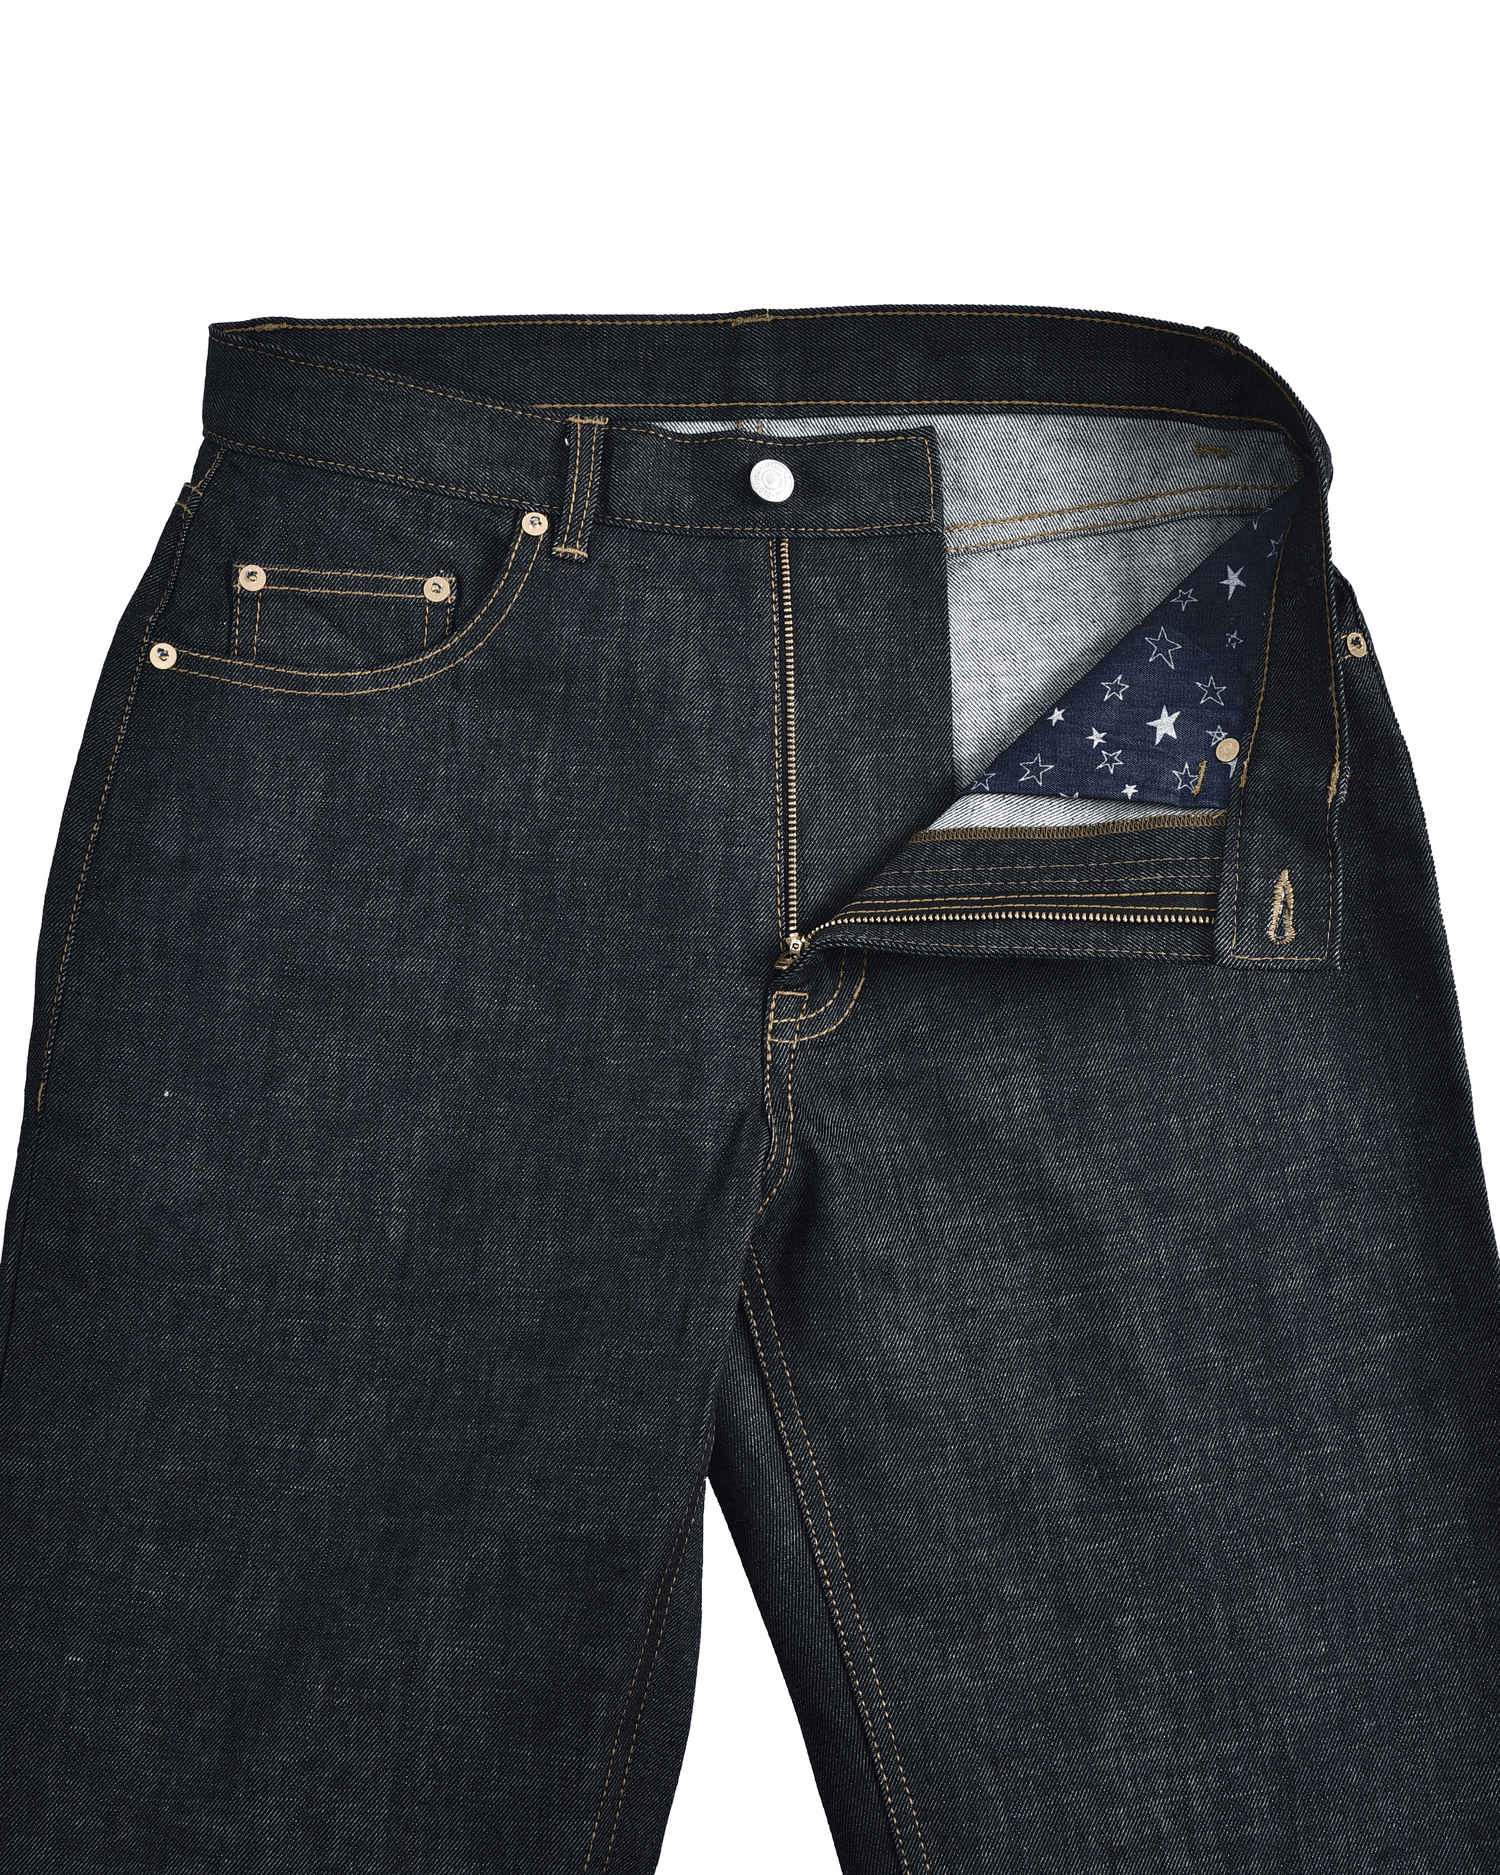 Front view of custom denim jeans for men by Luxire in dark indigo 2